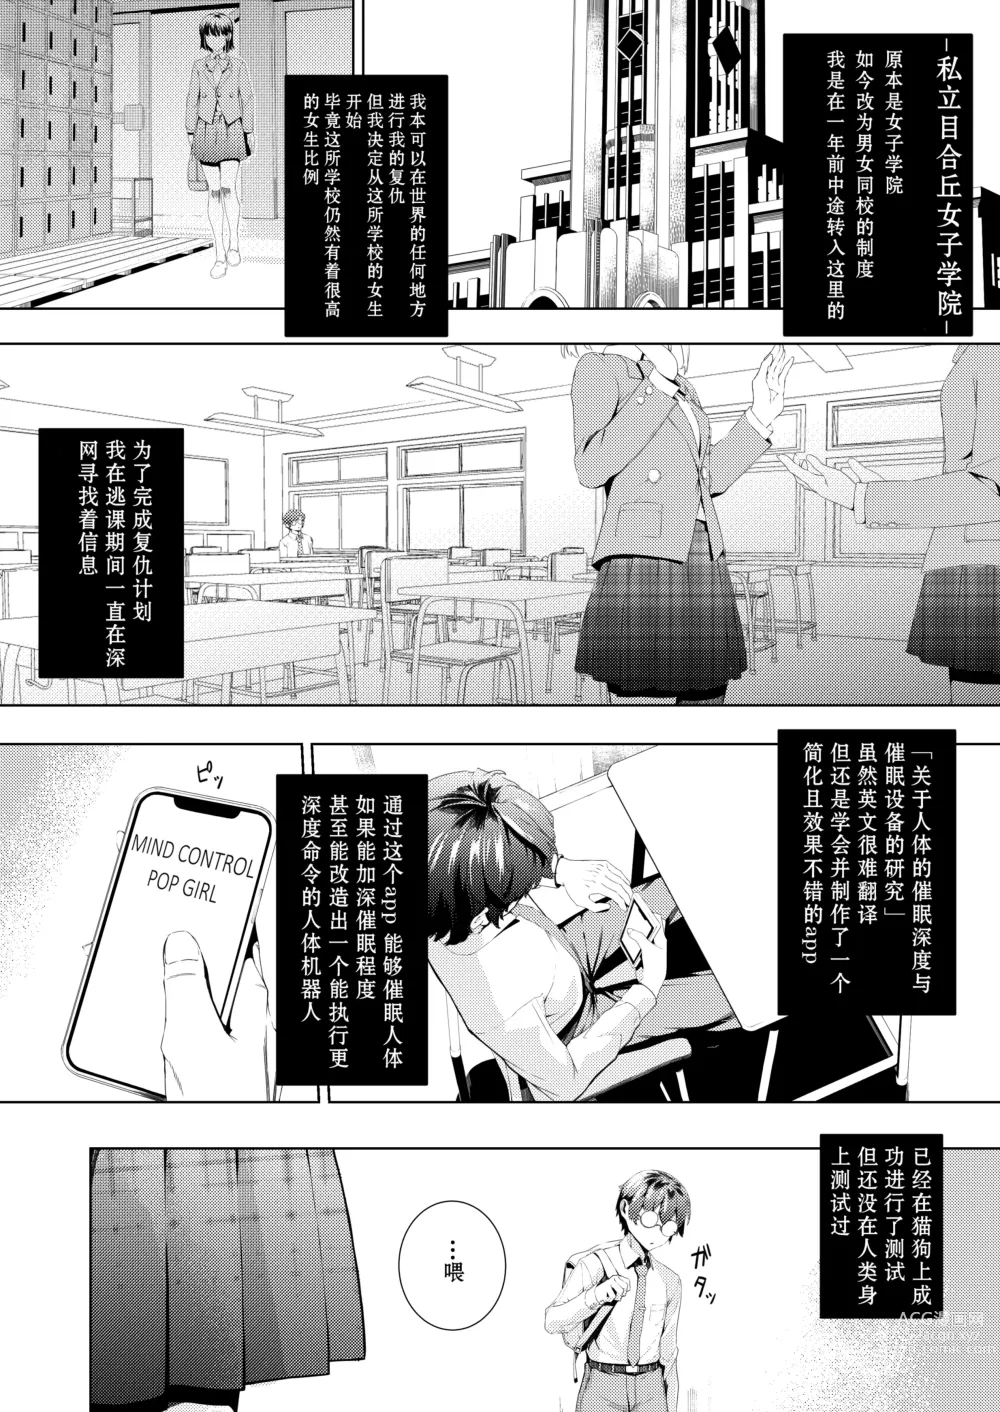 Page 4 of doujinshi MIND CONTROL POP GIRL Vol. 1